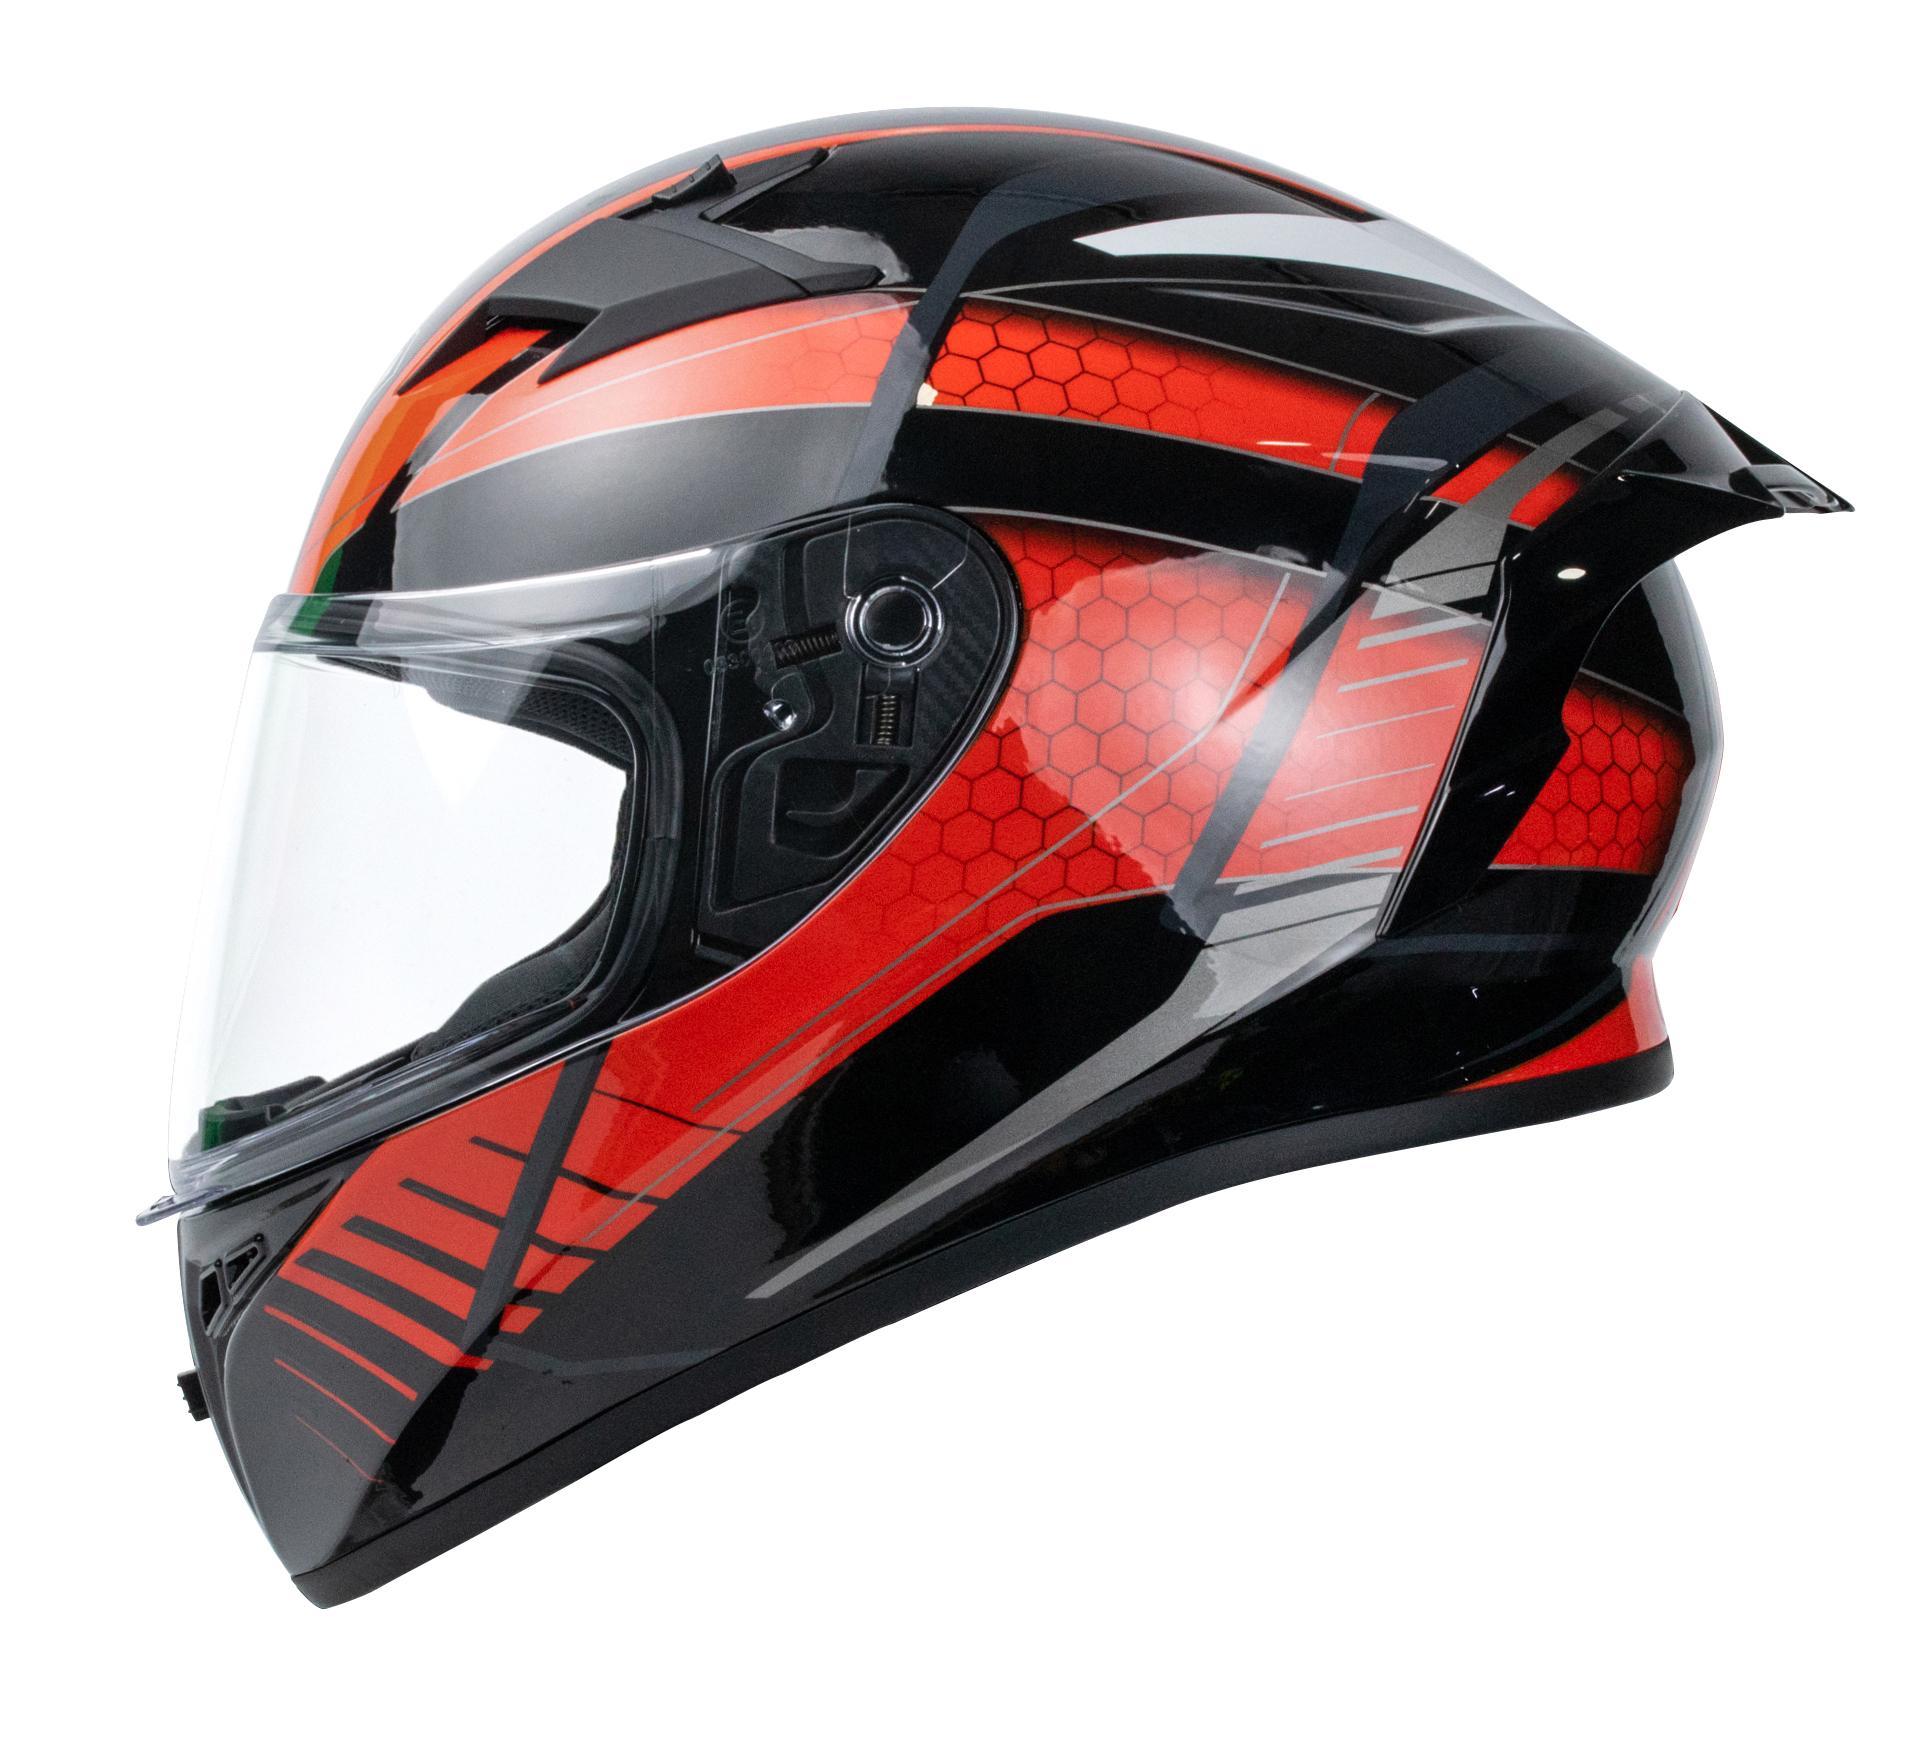 VietMotorbikes | Helmets for sale